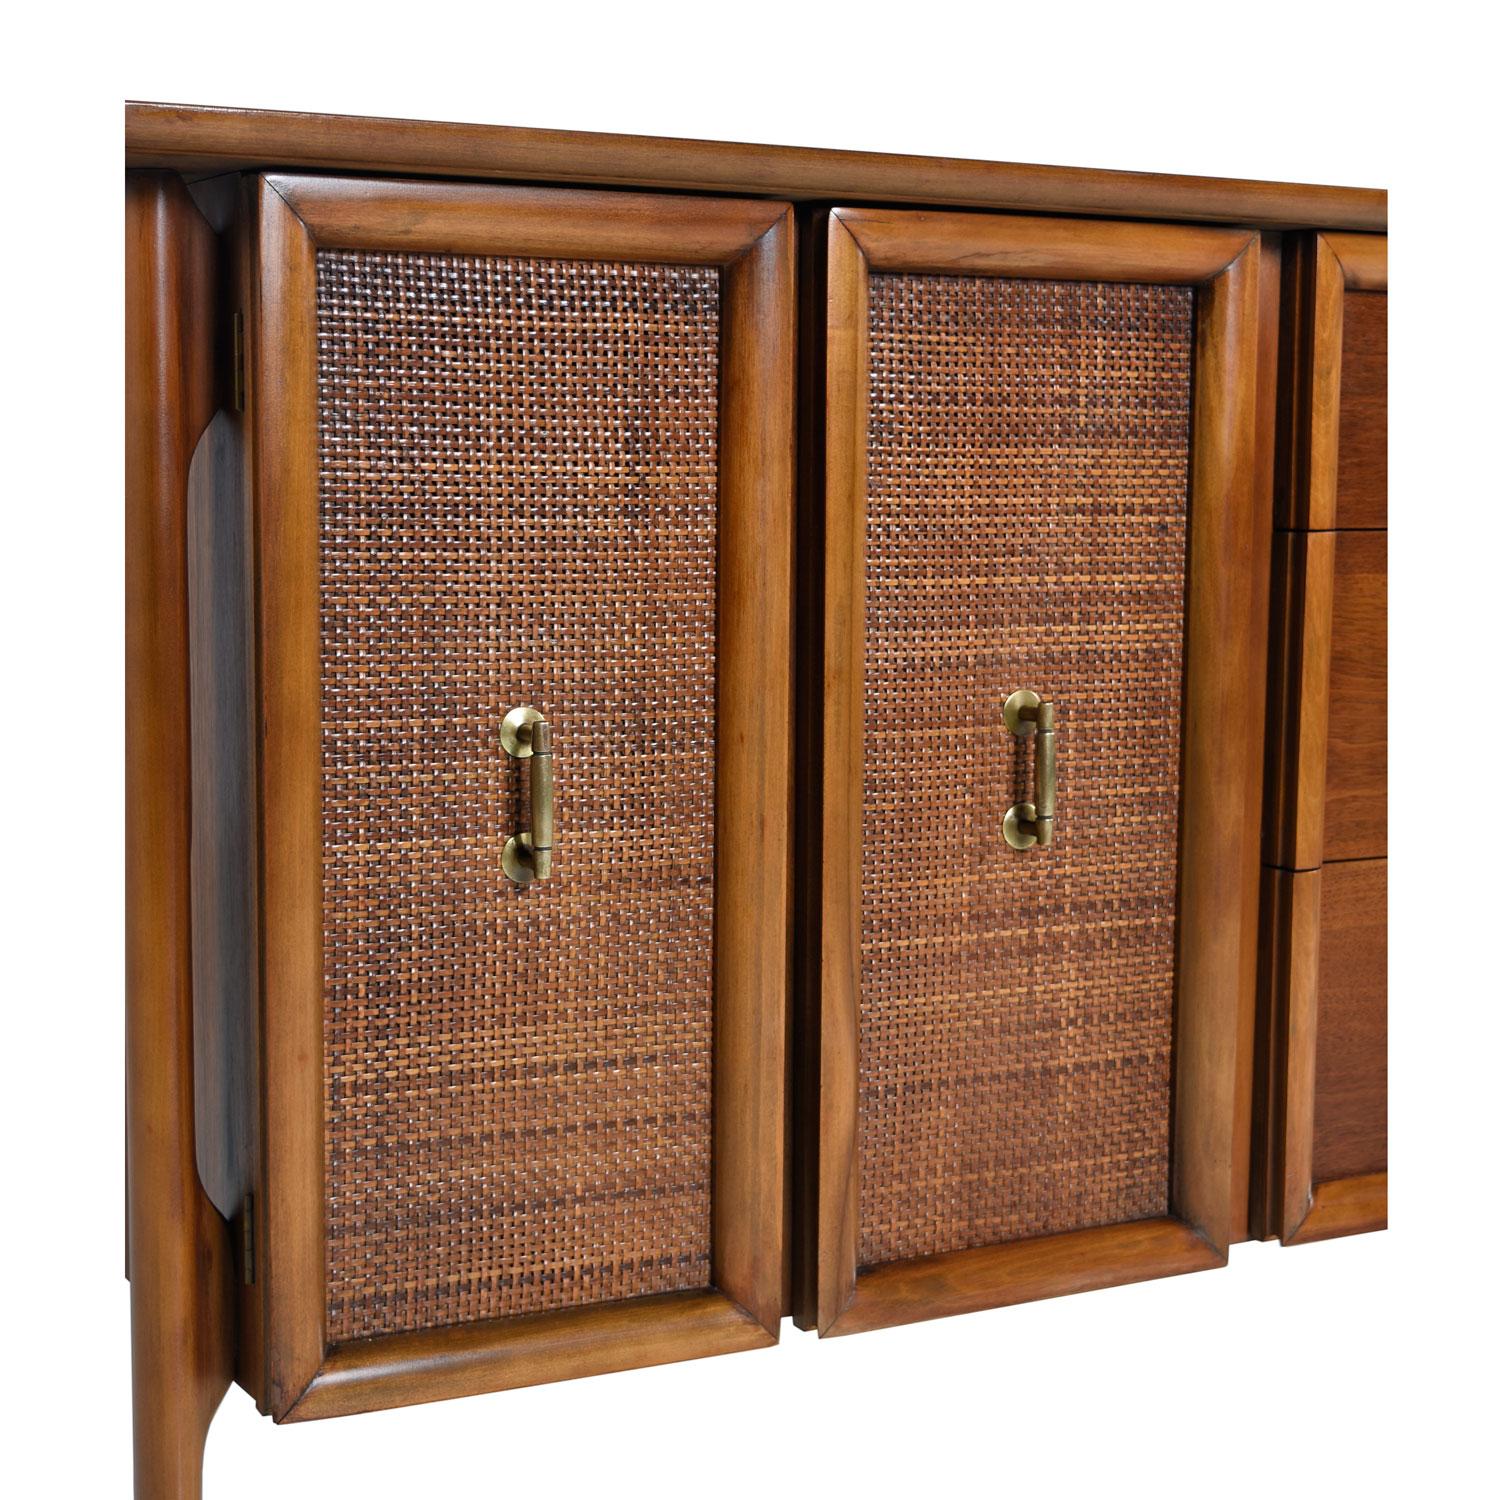 American Edmund Spence Style Mid-Century Modern Cane Door Brass Accent Credenza Buffet